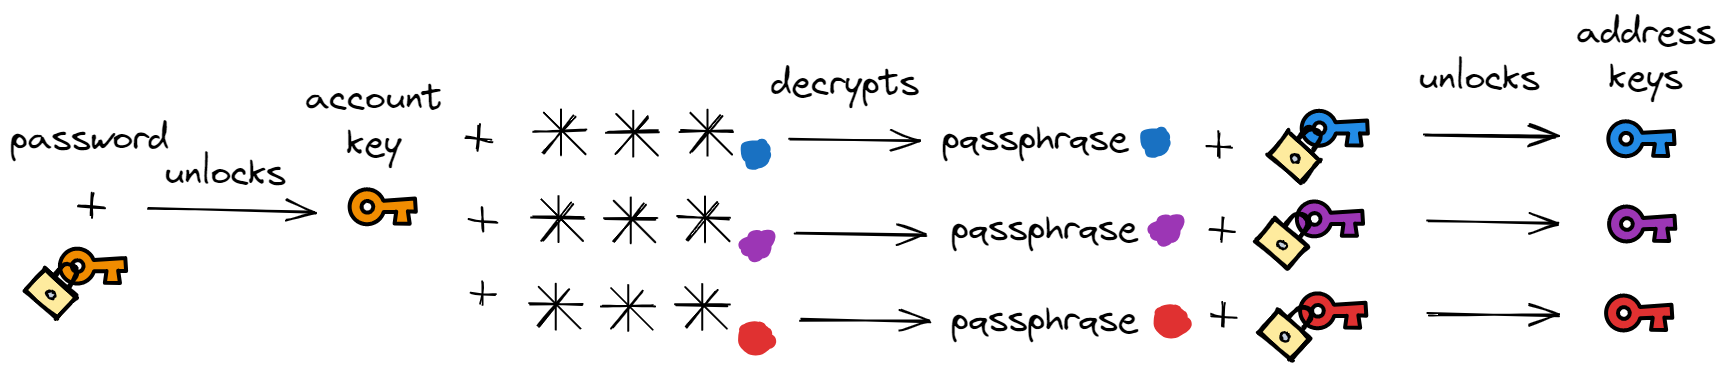 Proton key decryption